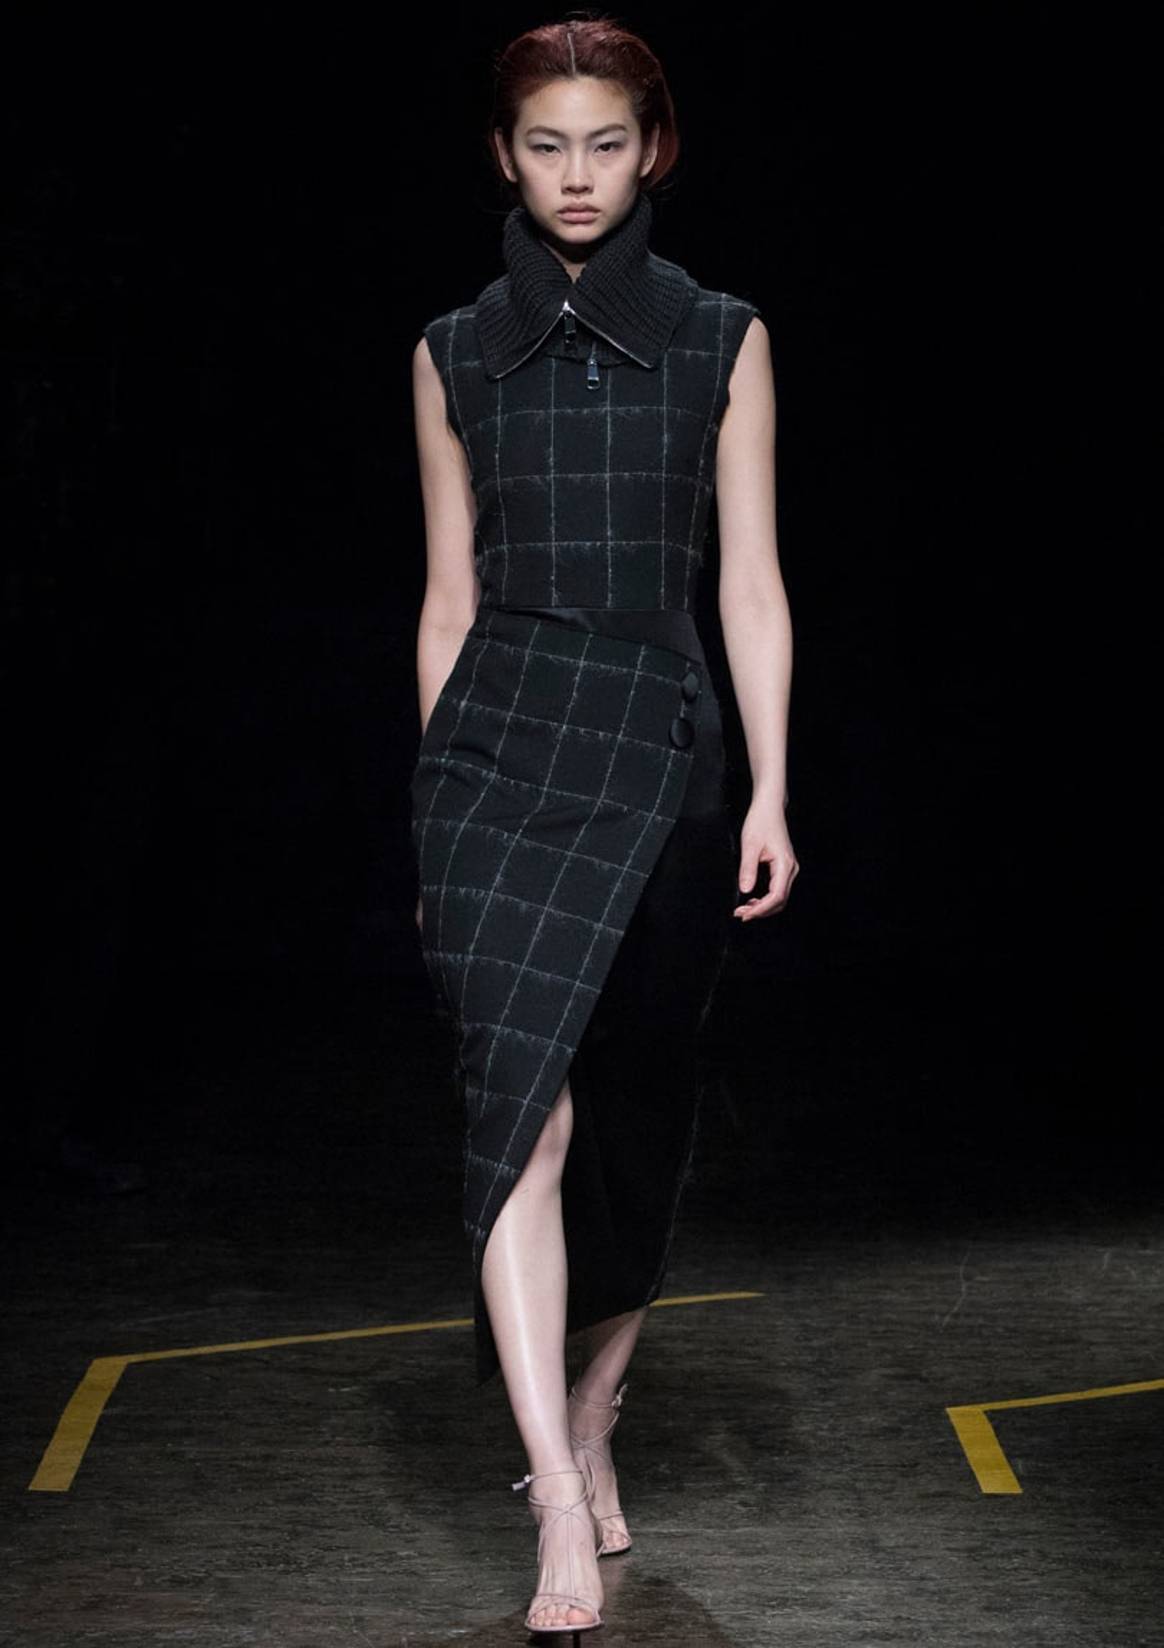 Hugo Boss presents final Jason Wu collection at New York Fashion Week